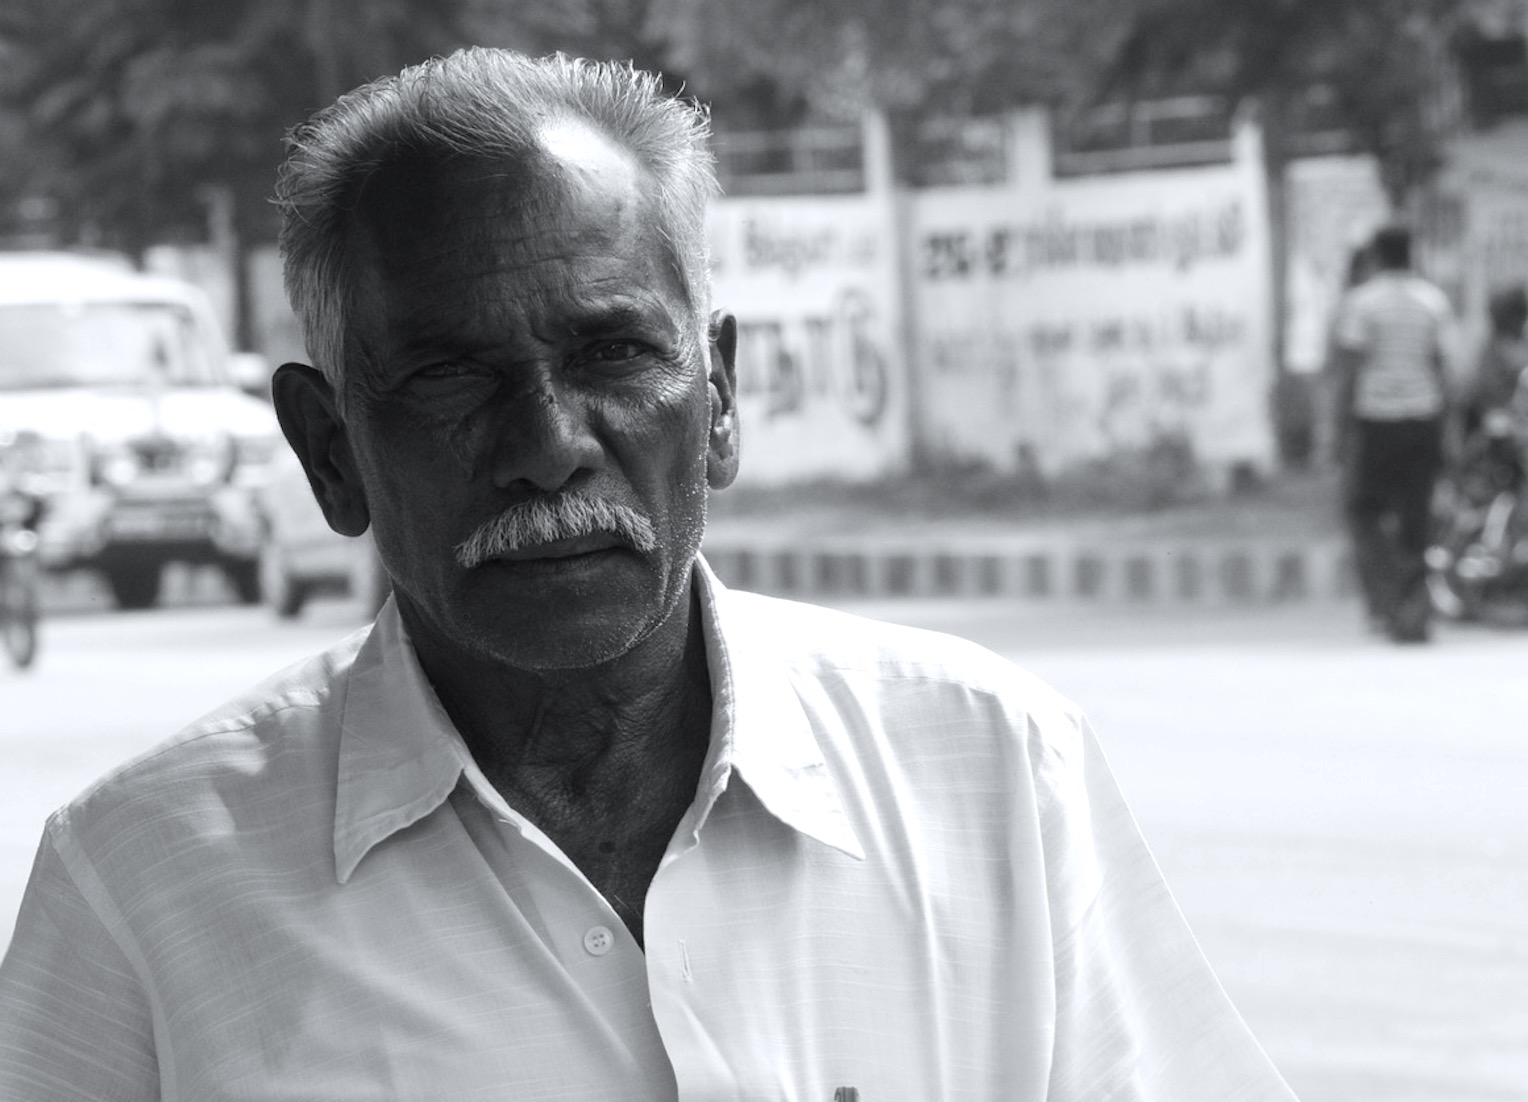 grandfather marathi essay ajoba